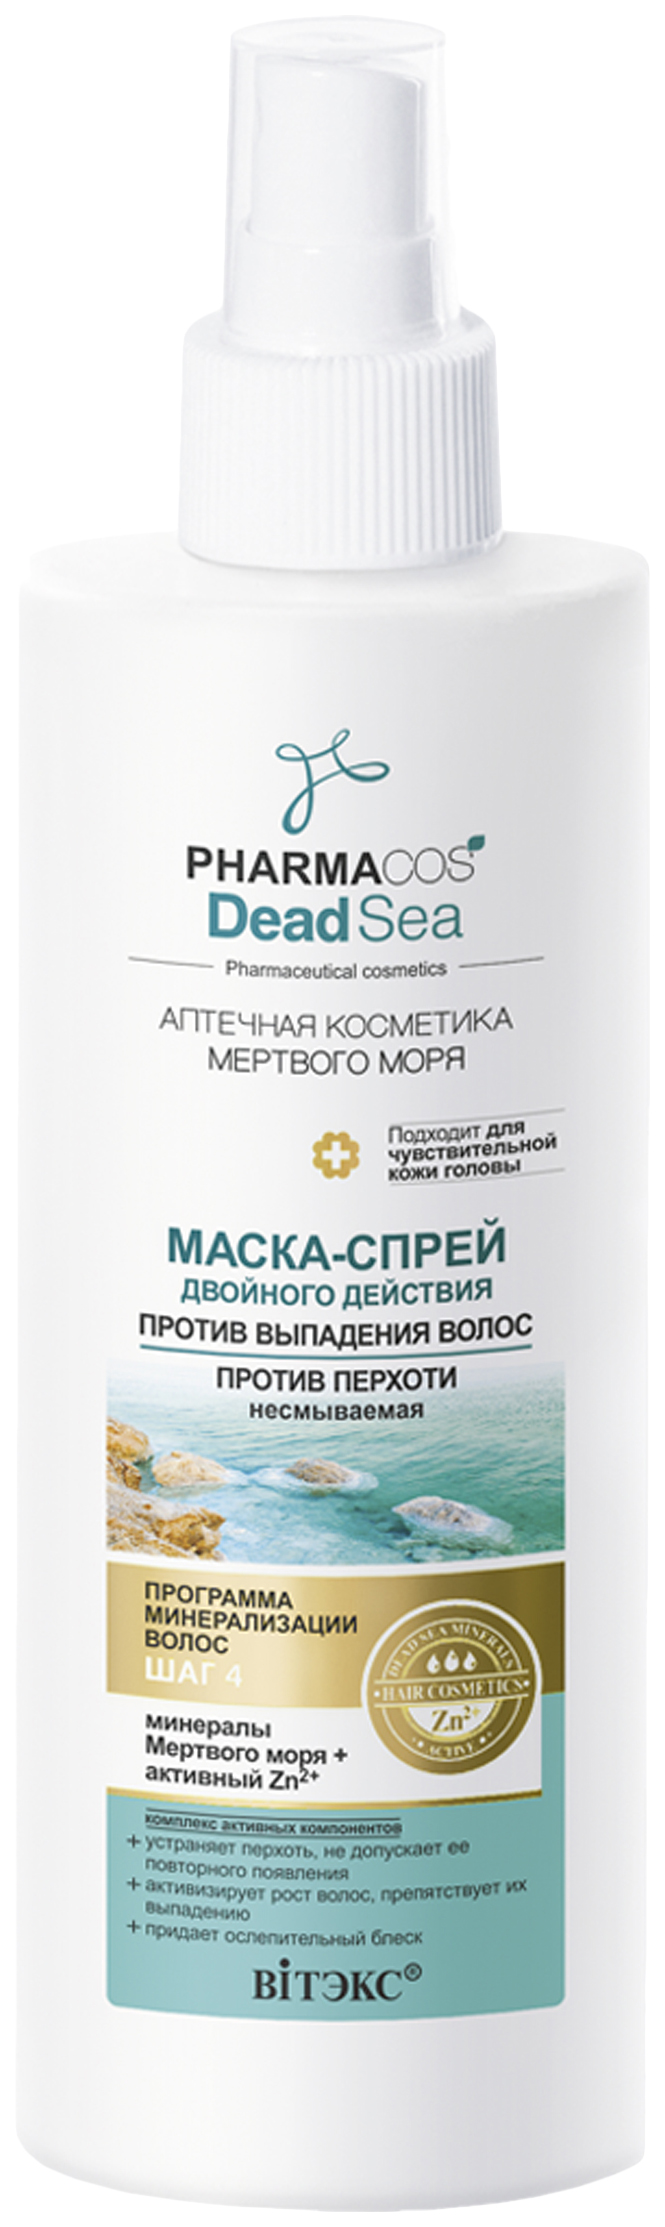 Маска для волос Витэкс Pharmacos Dead Sea